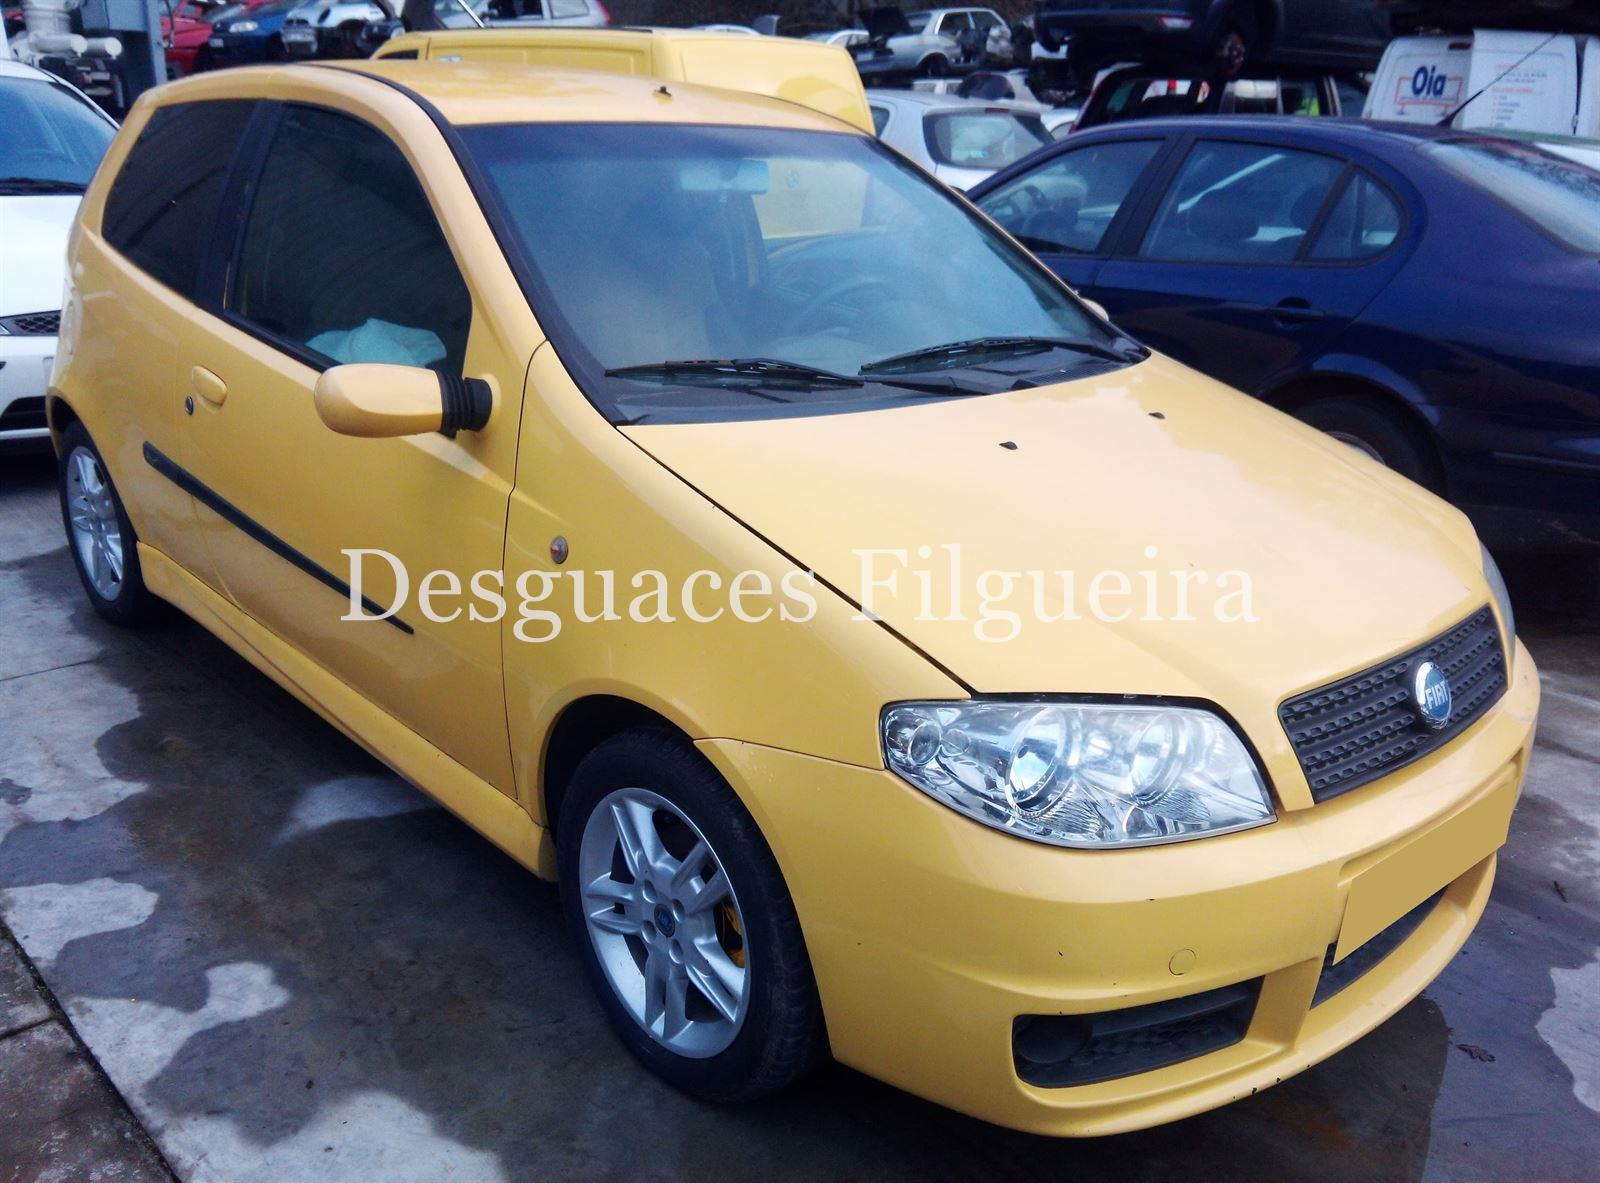 Despiece Fiat Punto 1.4 16V 843 A1000 - Imagen 3